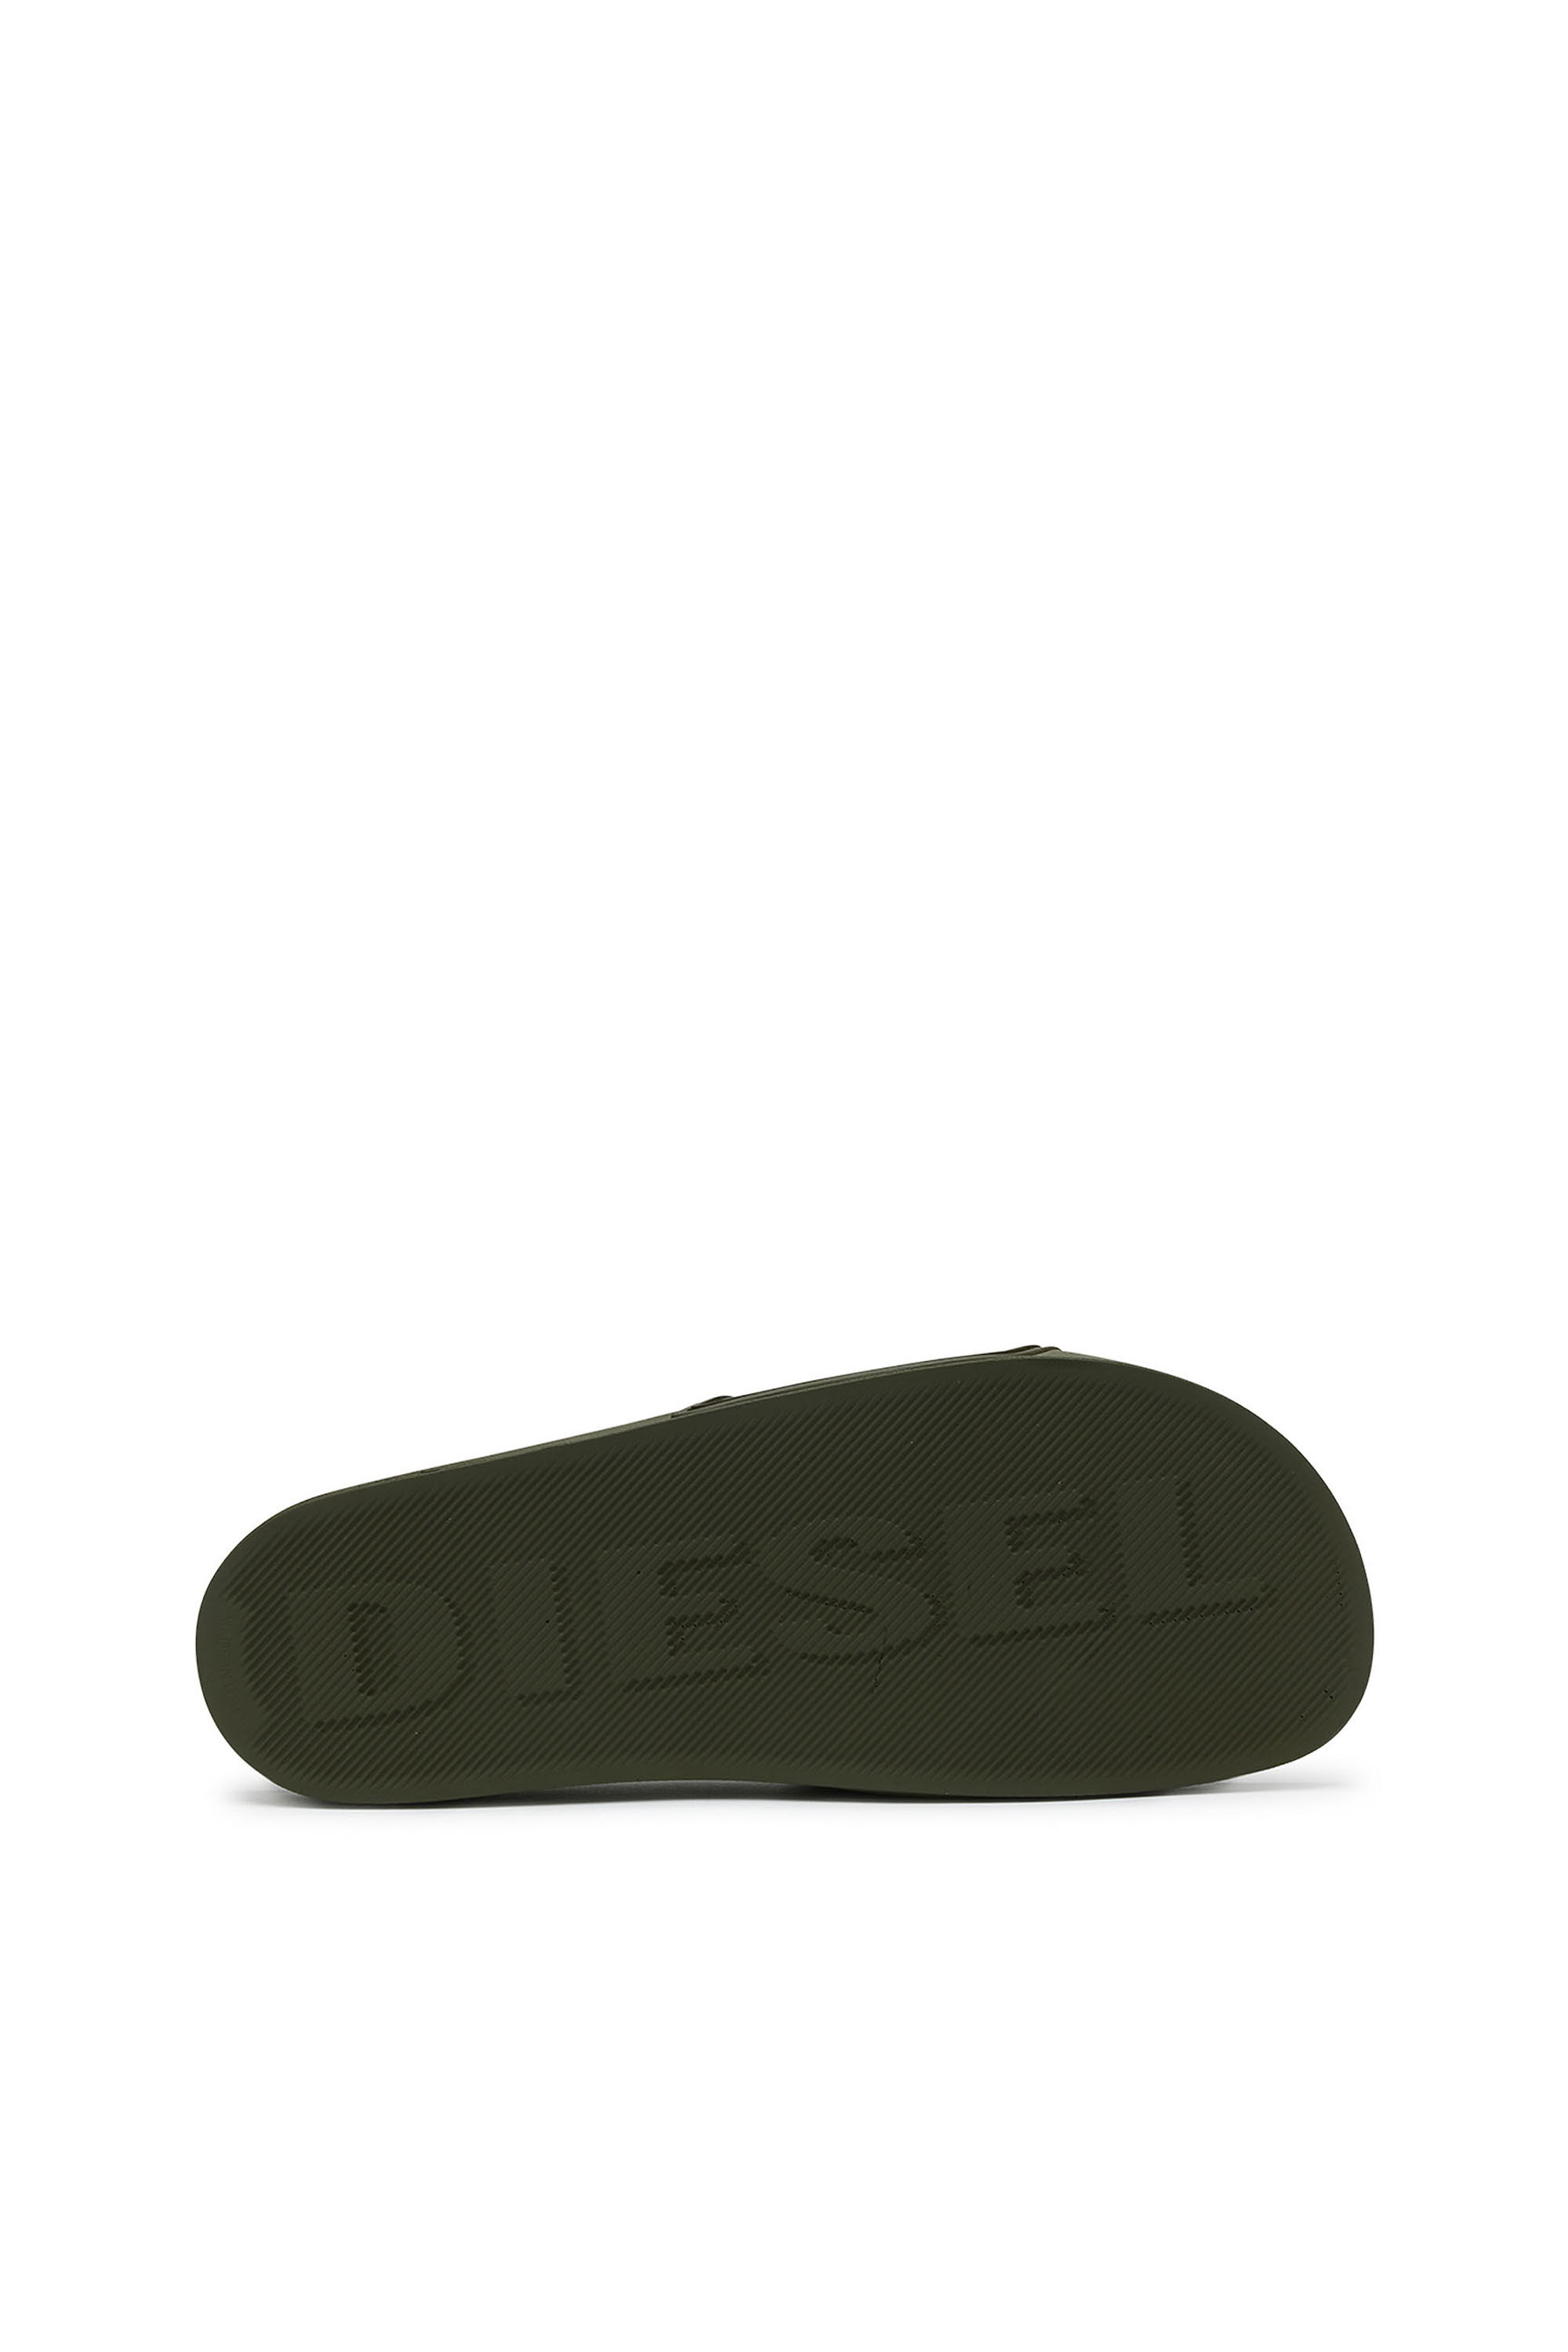 Diesel's rubber slides for Man | Diesel SA-MAYEMI CC